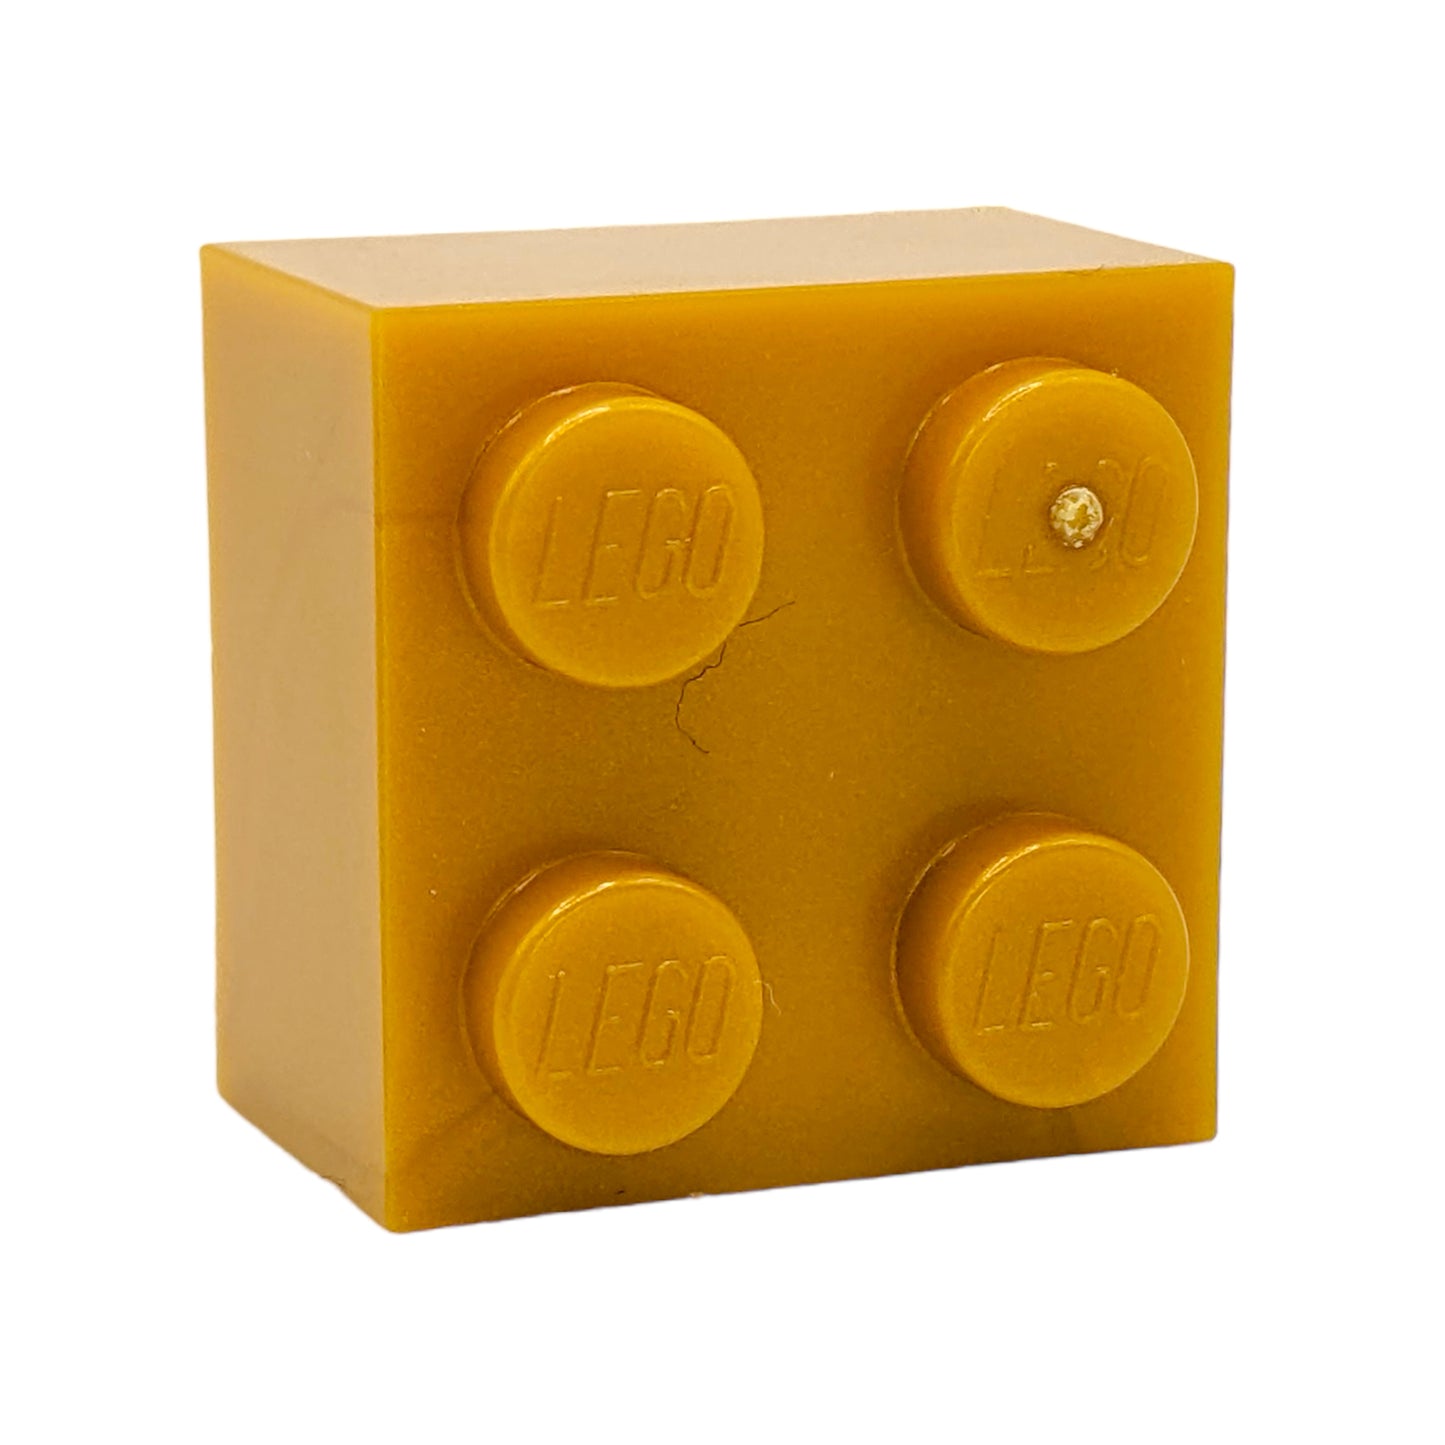 LEGO Brick / Stein 2x2 - Pearl Gold